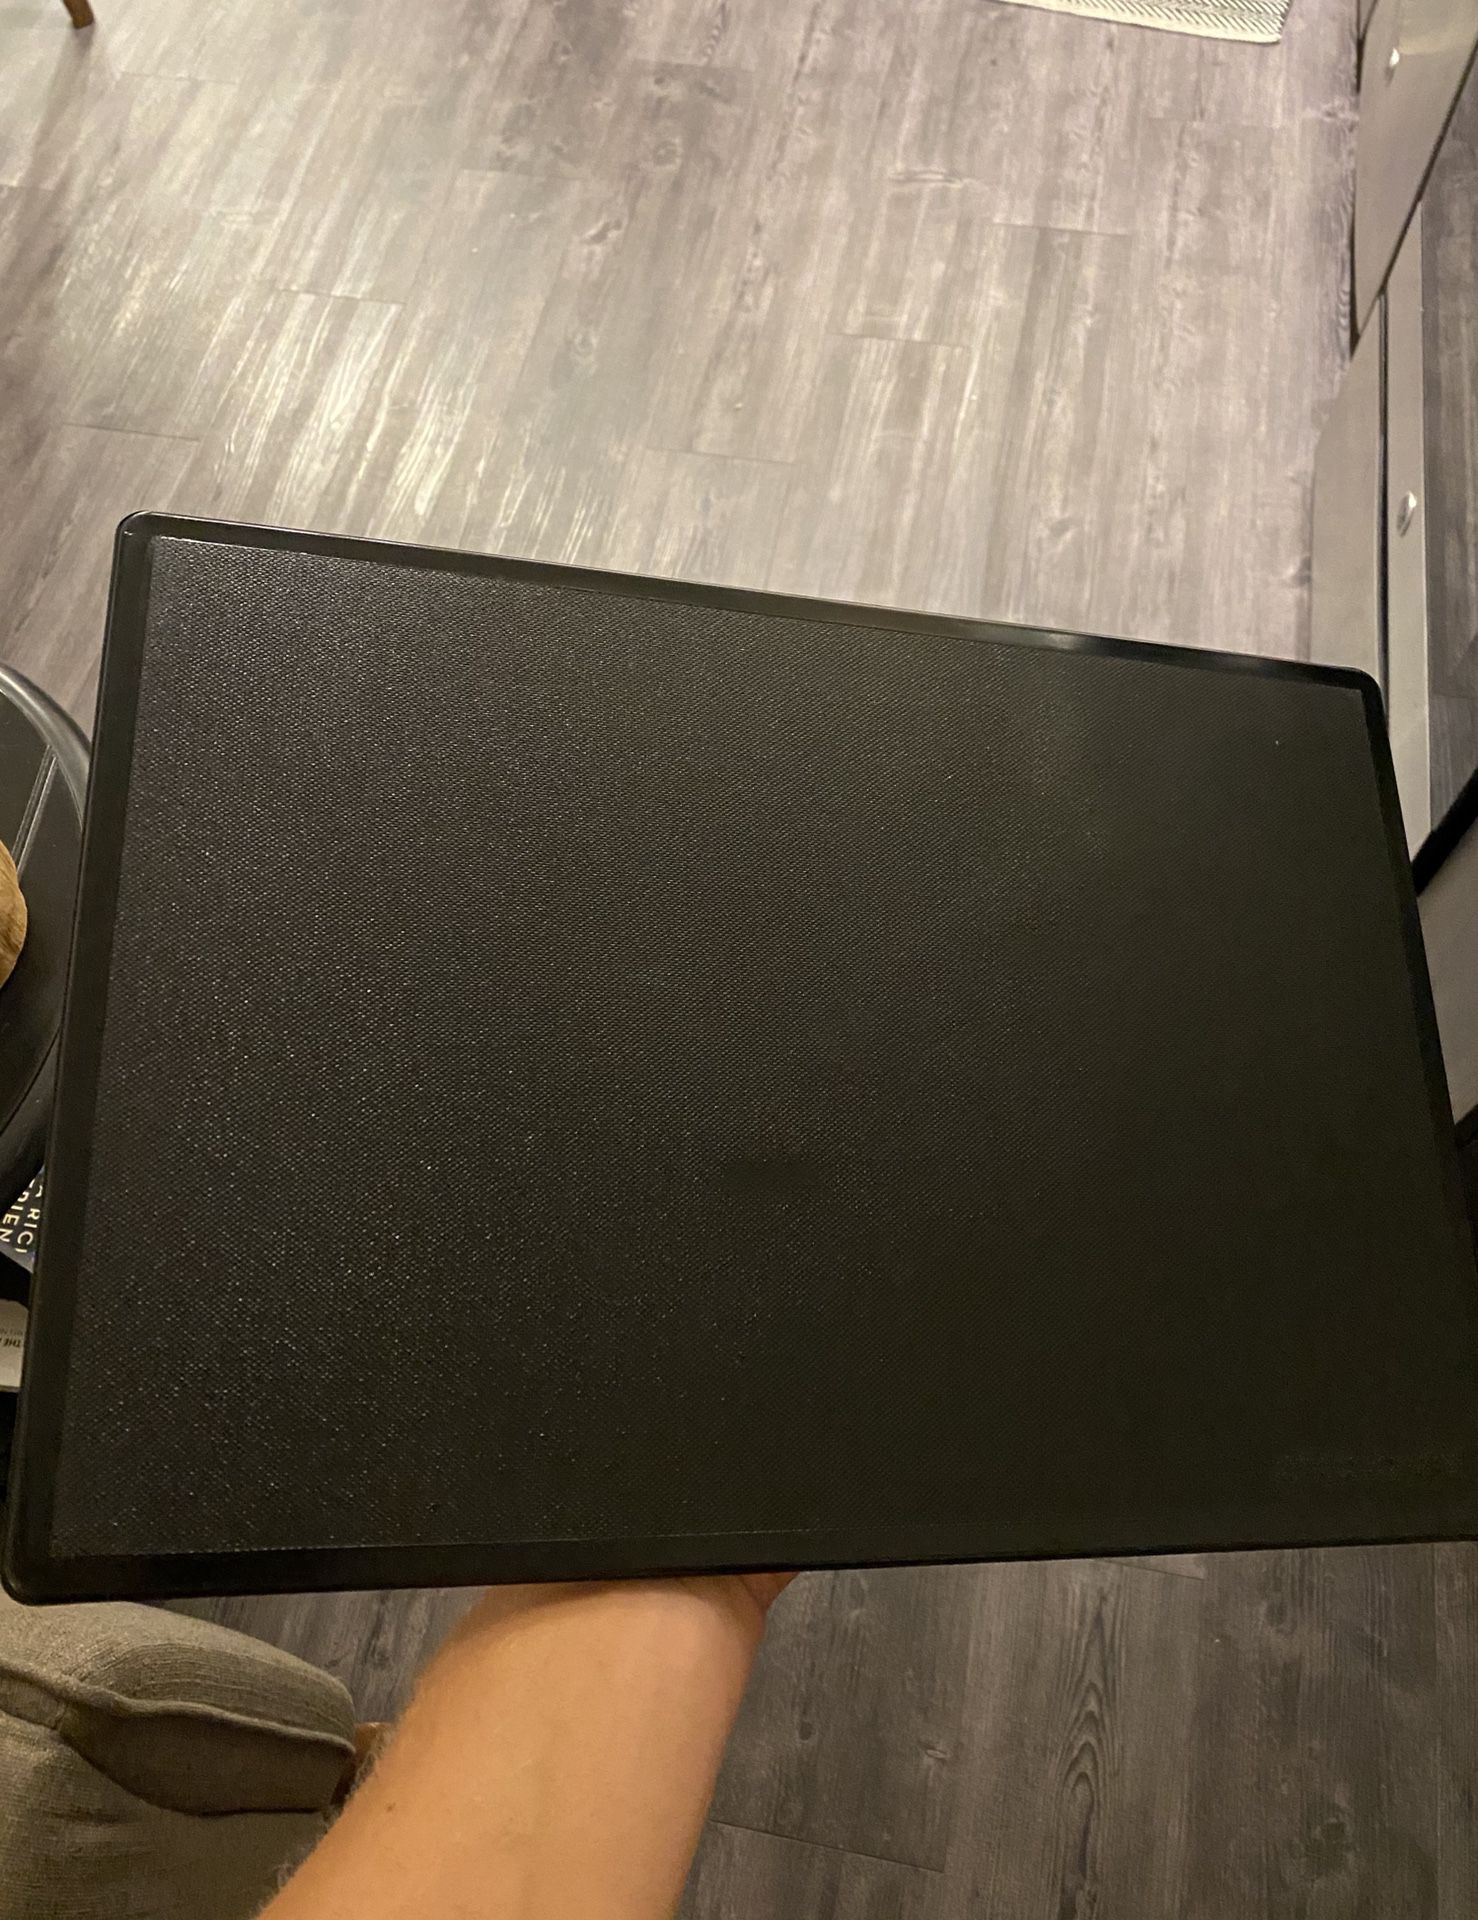 The DefenderPad Laptop EMF Radiation & Heat Shield